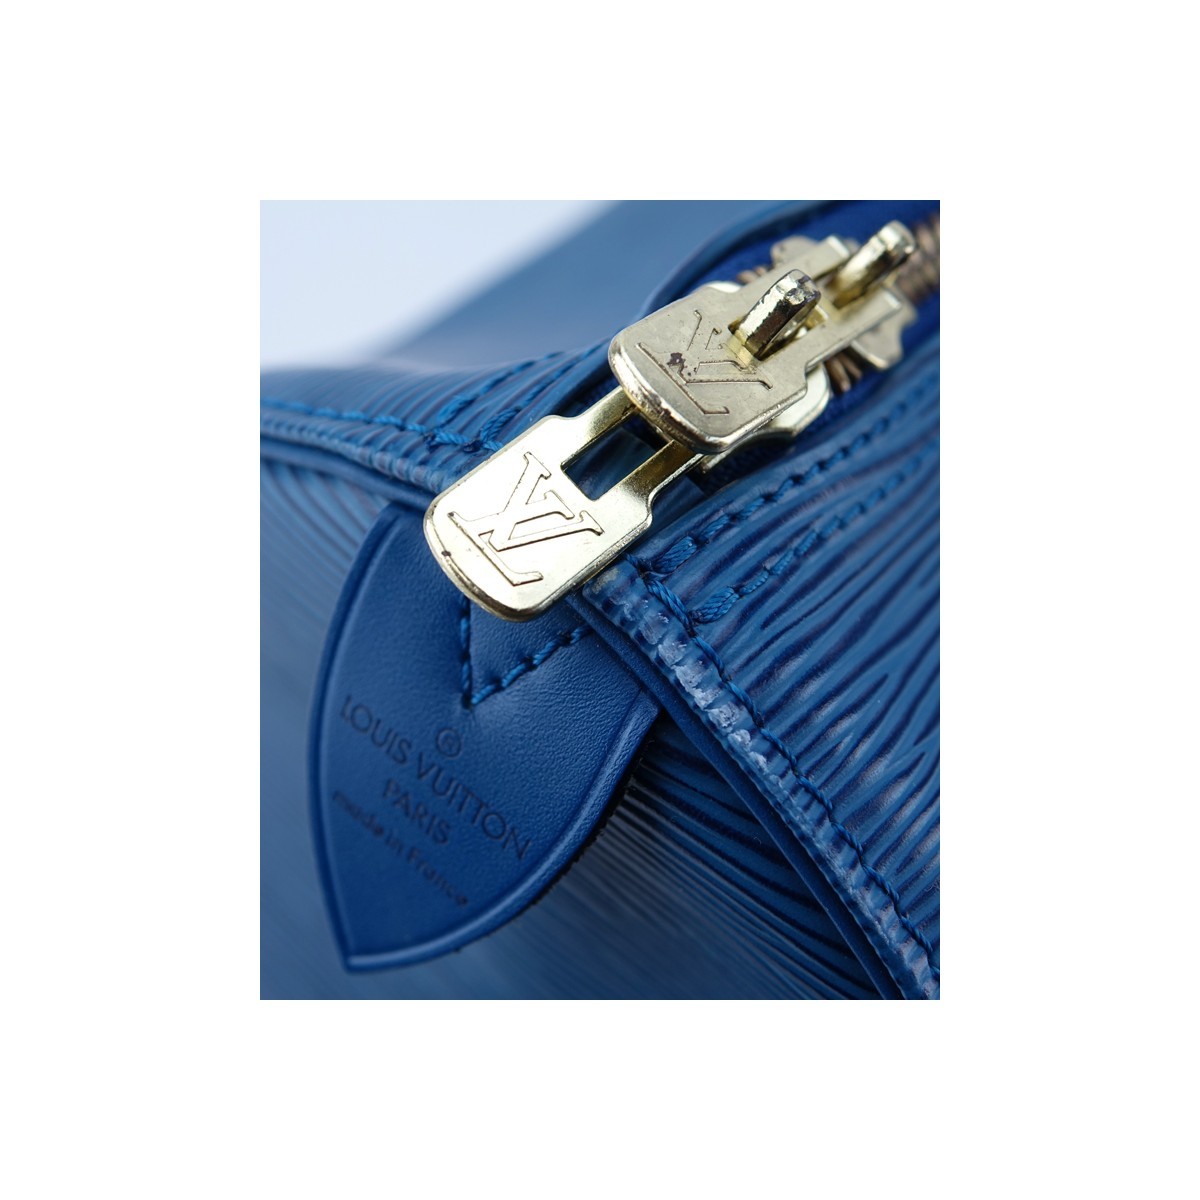 Louis Vuitton Blue Epi Leather Keepall 50 Travel Bag. Golden brass hardware, leather interior, luggage tag, handle strap, cadenas & keys.